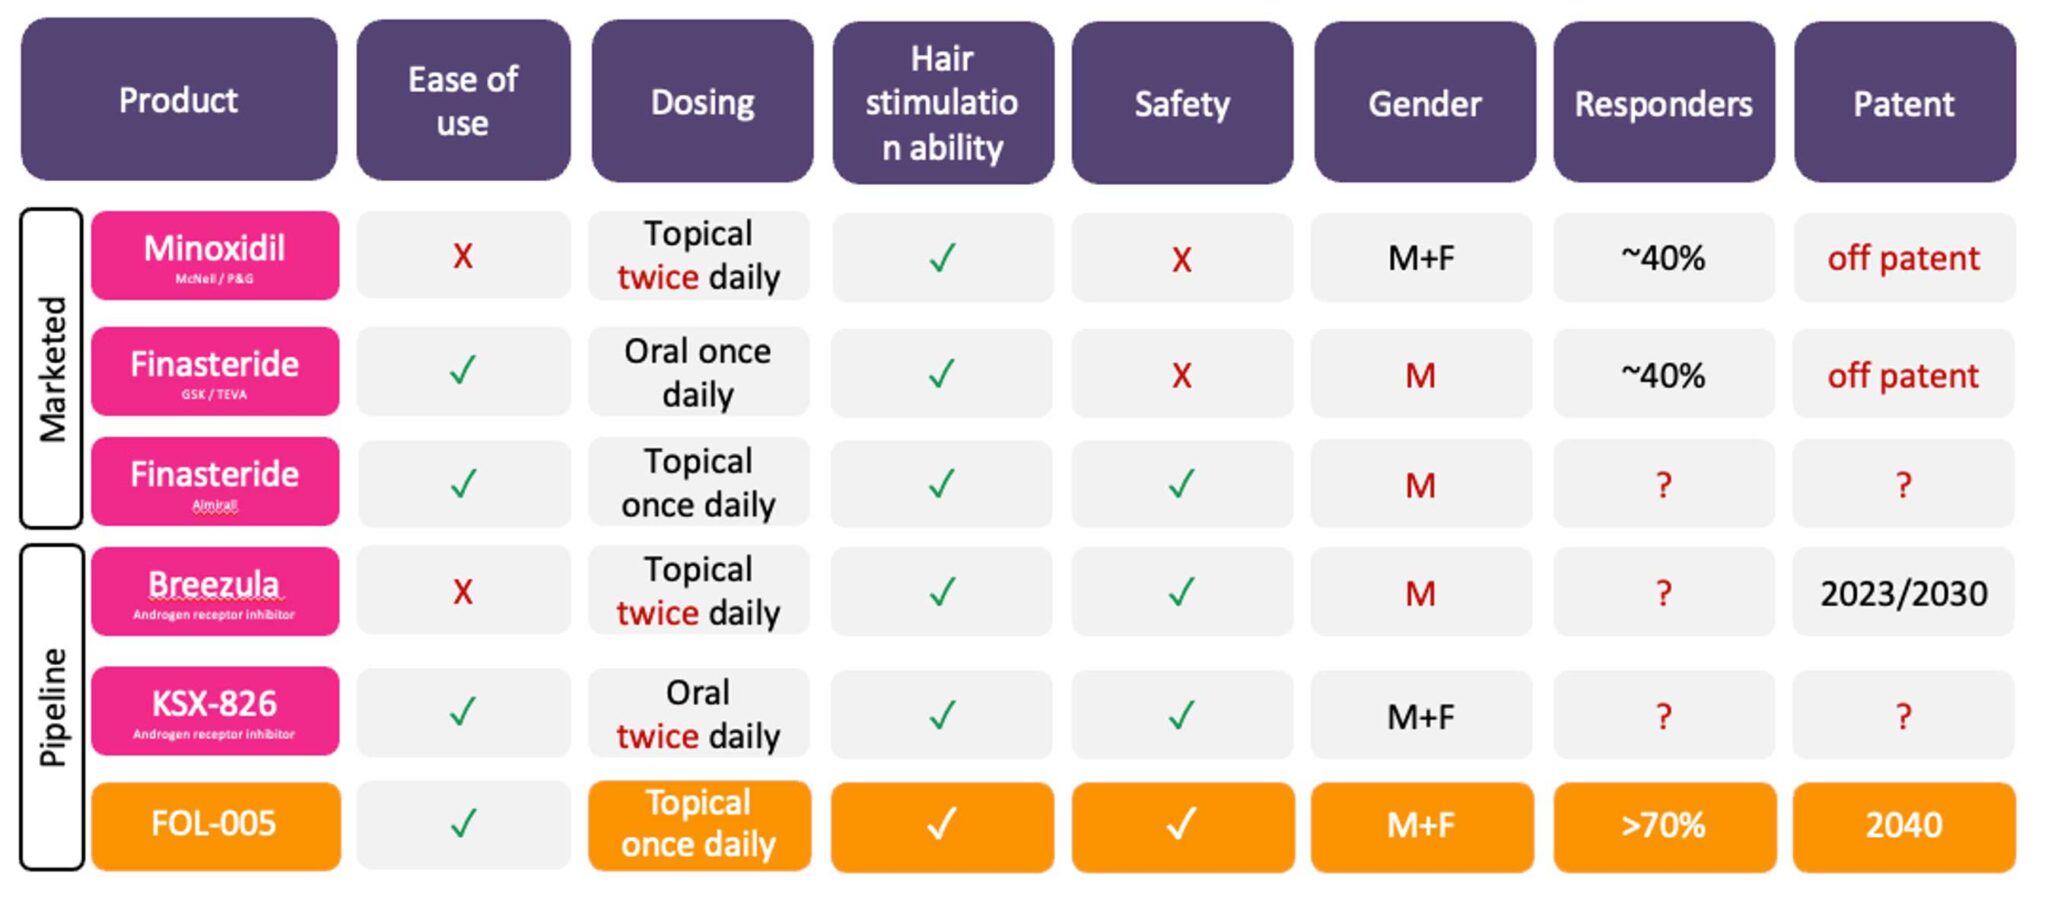 FOL005-peptide gel benefits vs. hairloss drugs.